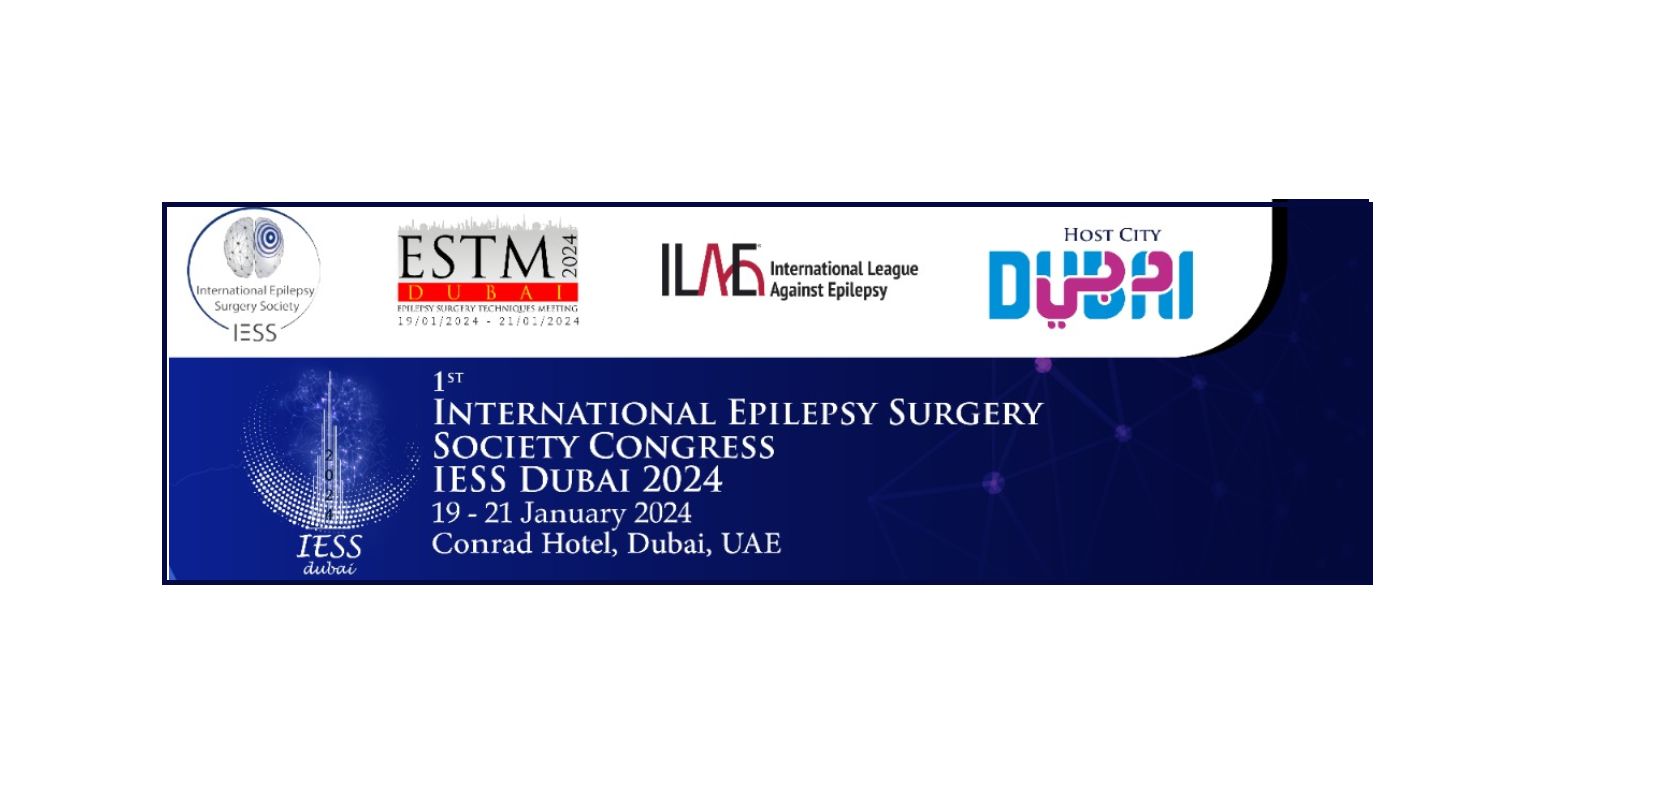 The International Epilepsy Surgery Society Congress IESS Dubai 2024, Dubai, United Arab Emirates